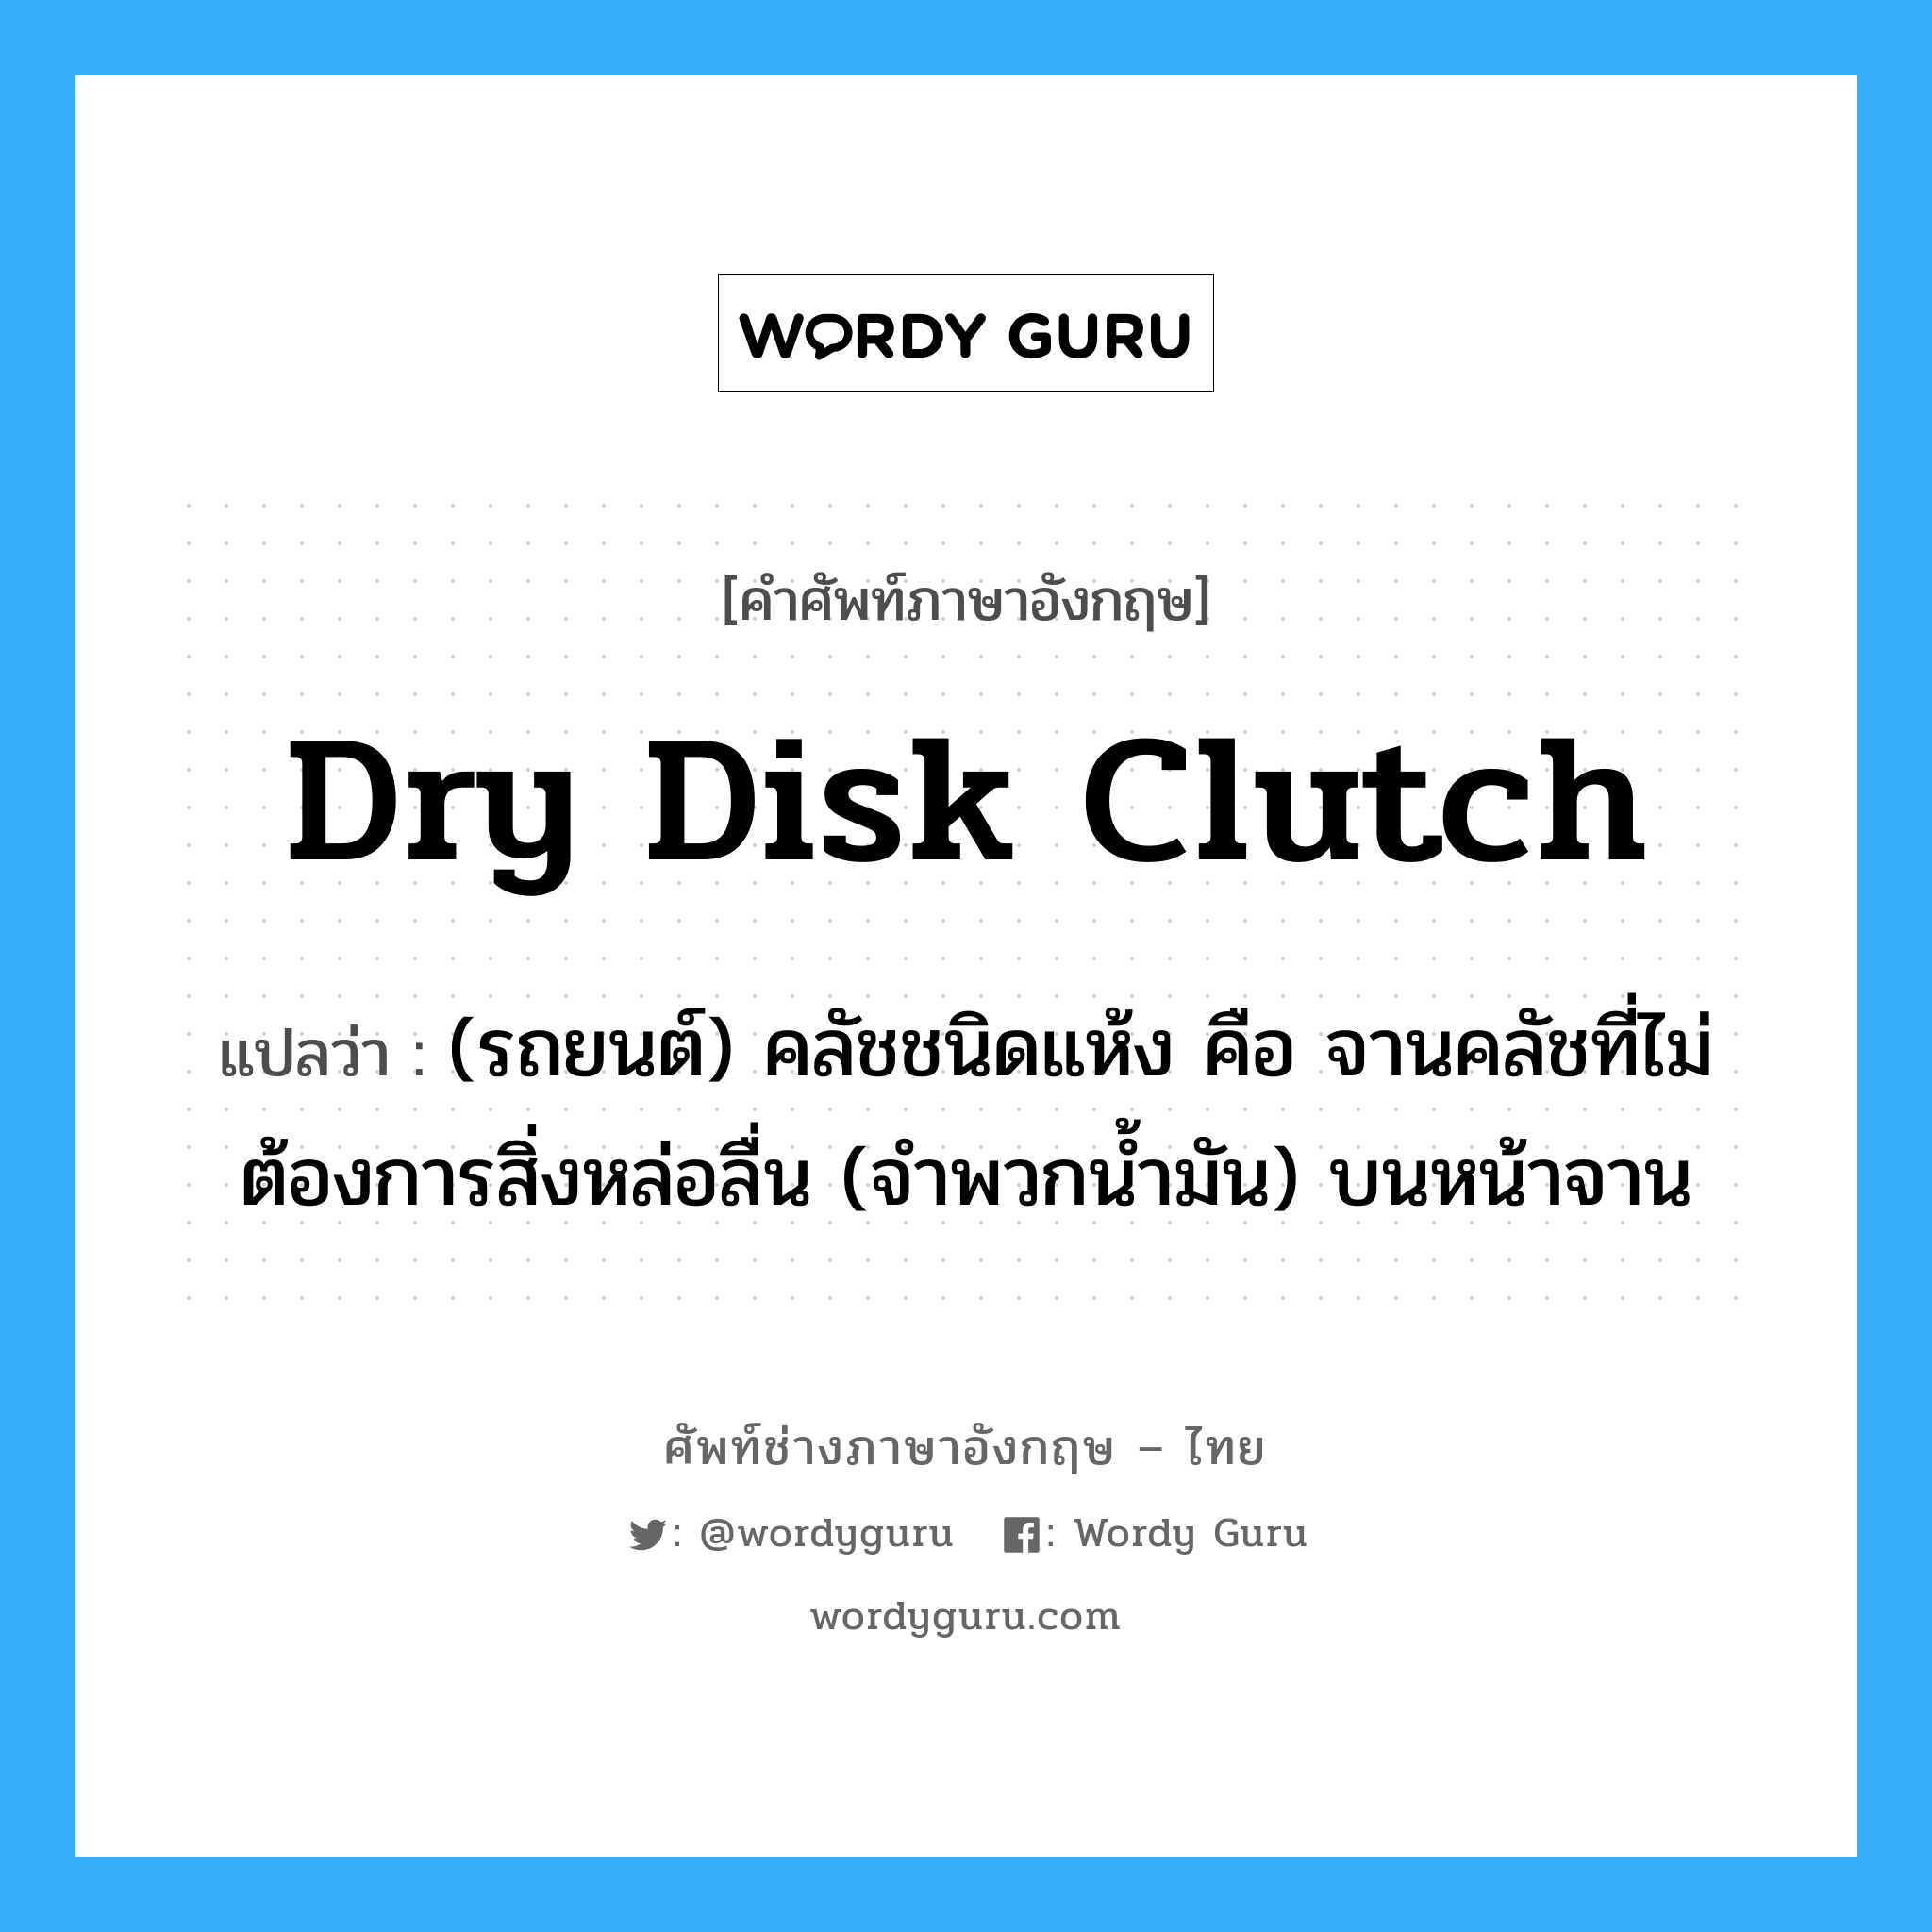 dry disk clutch แปลว่า?, คำศัพท์ช่างภาษาอังกฤษ - ไทย dry disk clutch คำศัพท์ภาษาอังกฤษ dry disk clutch แปลว่า (รถยนต์) คลัชชนิดแห้ง คือ จานคลัชที่ไม่ต้องการสิ่งหล่อลื่น (จำพวกน้ำมัน) บนหน้าจาน